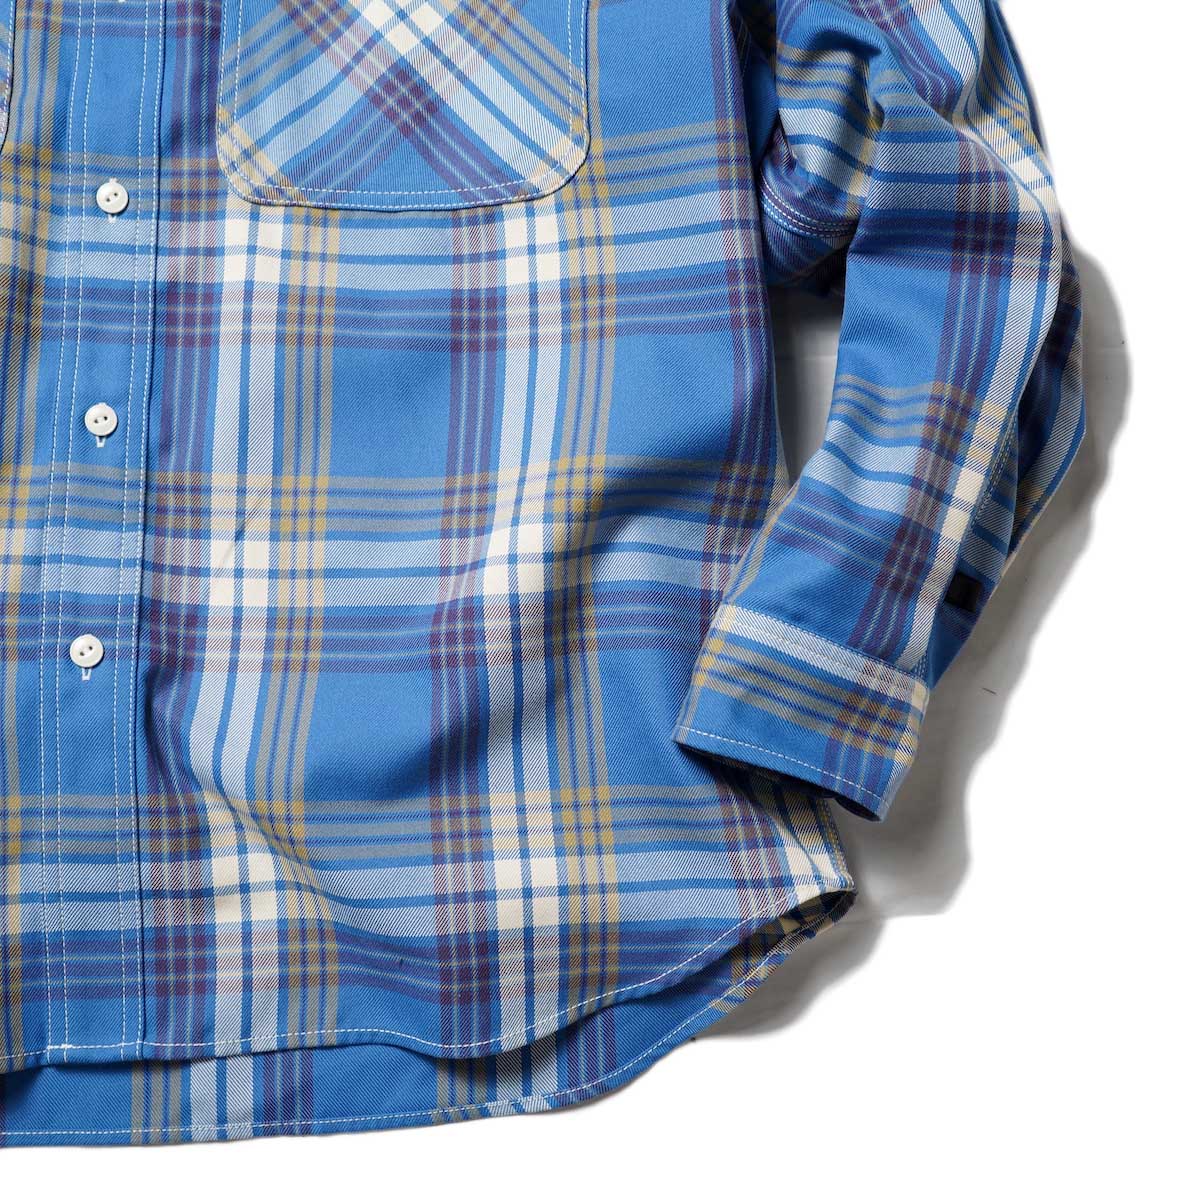 DAIWA PIER39 / TECH ELBOW PATCH WORK SHIRTS FLANNEL (Blue Check)袖、裾